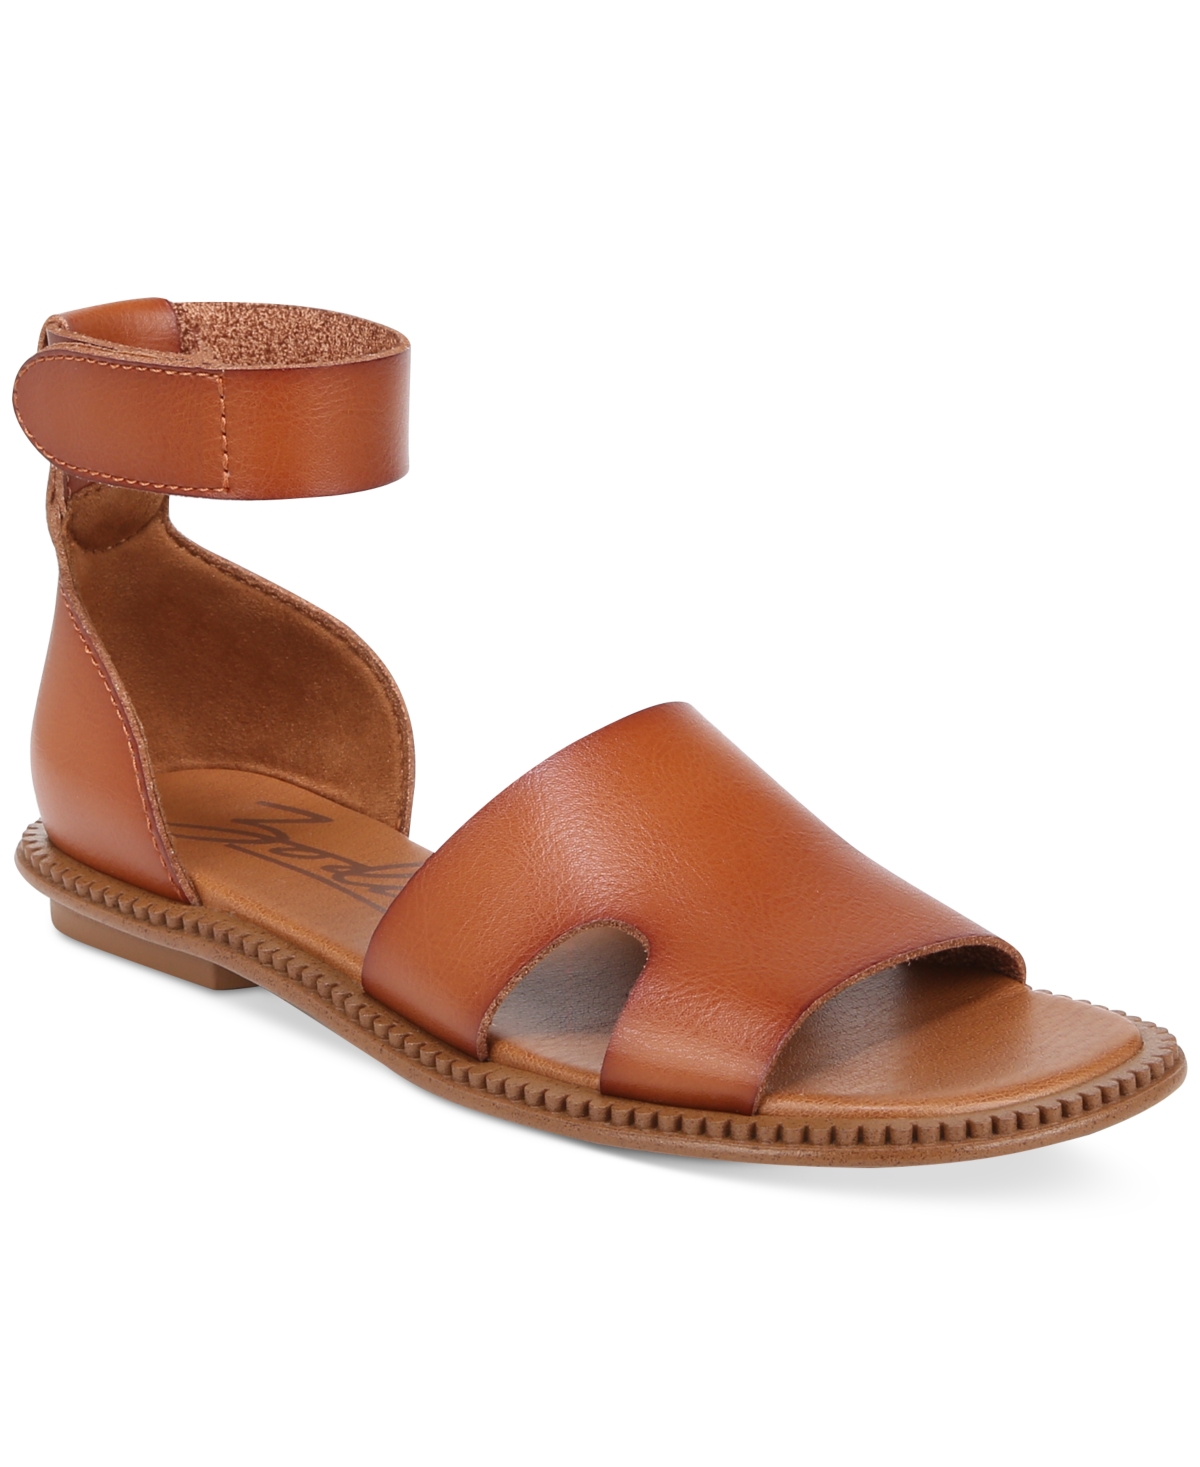 Women's Fran Ankle-Strap Flat Sandals - Brown